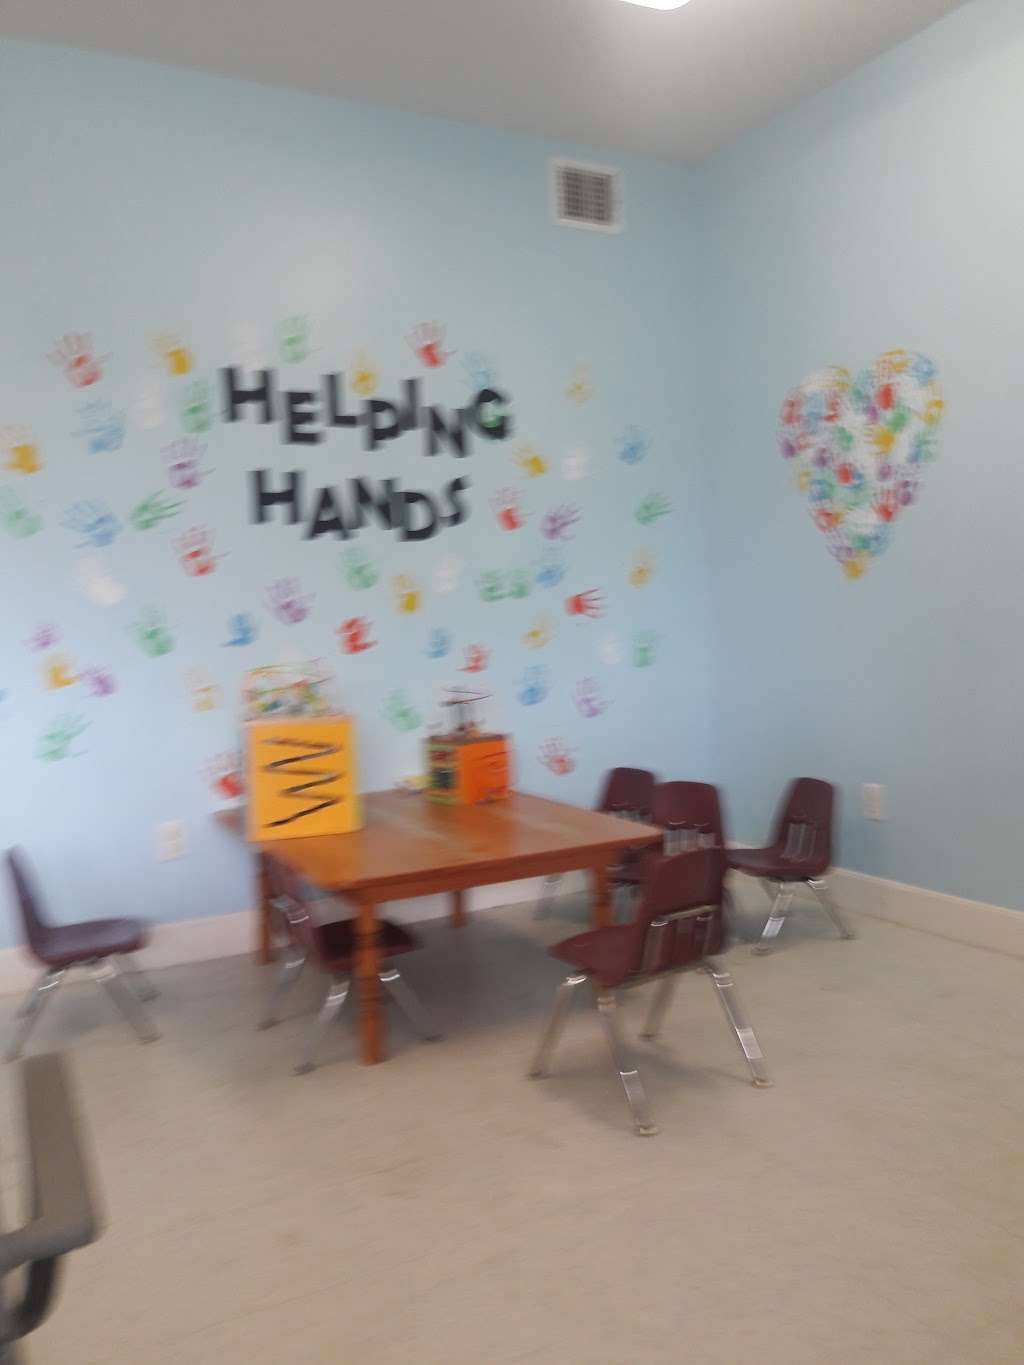 Helping Hands | 902 Collins Rd, Richmond, TX 77469, USA | Phone: (281) 232-7702